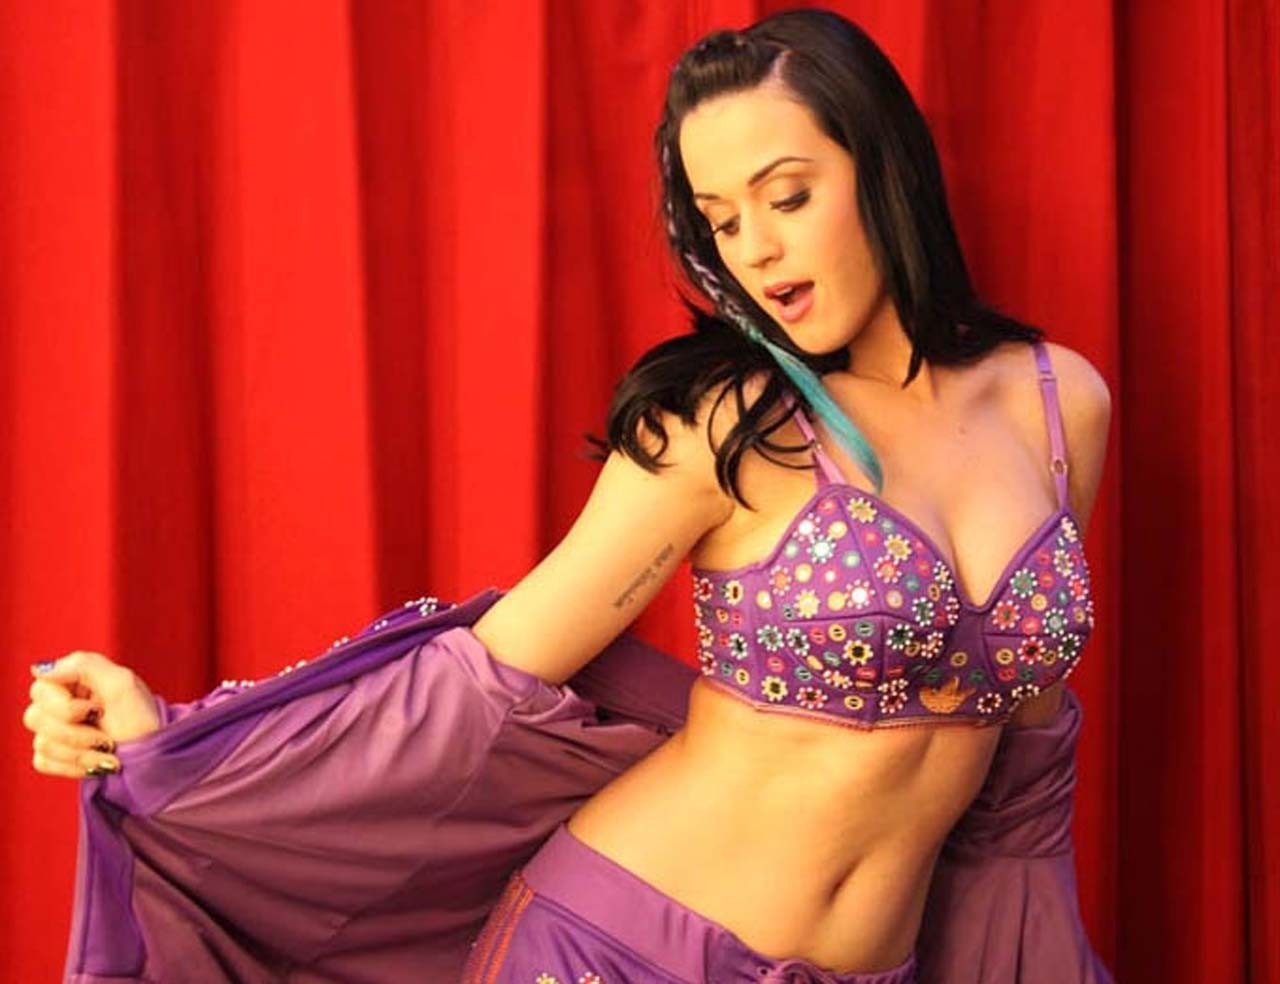 Katy Perry entblößt sexy Körper und tolle Brüste
 #75312704